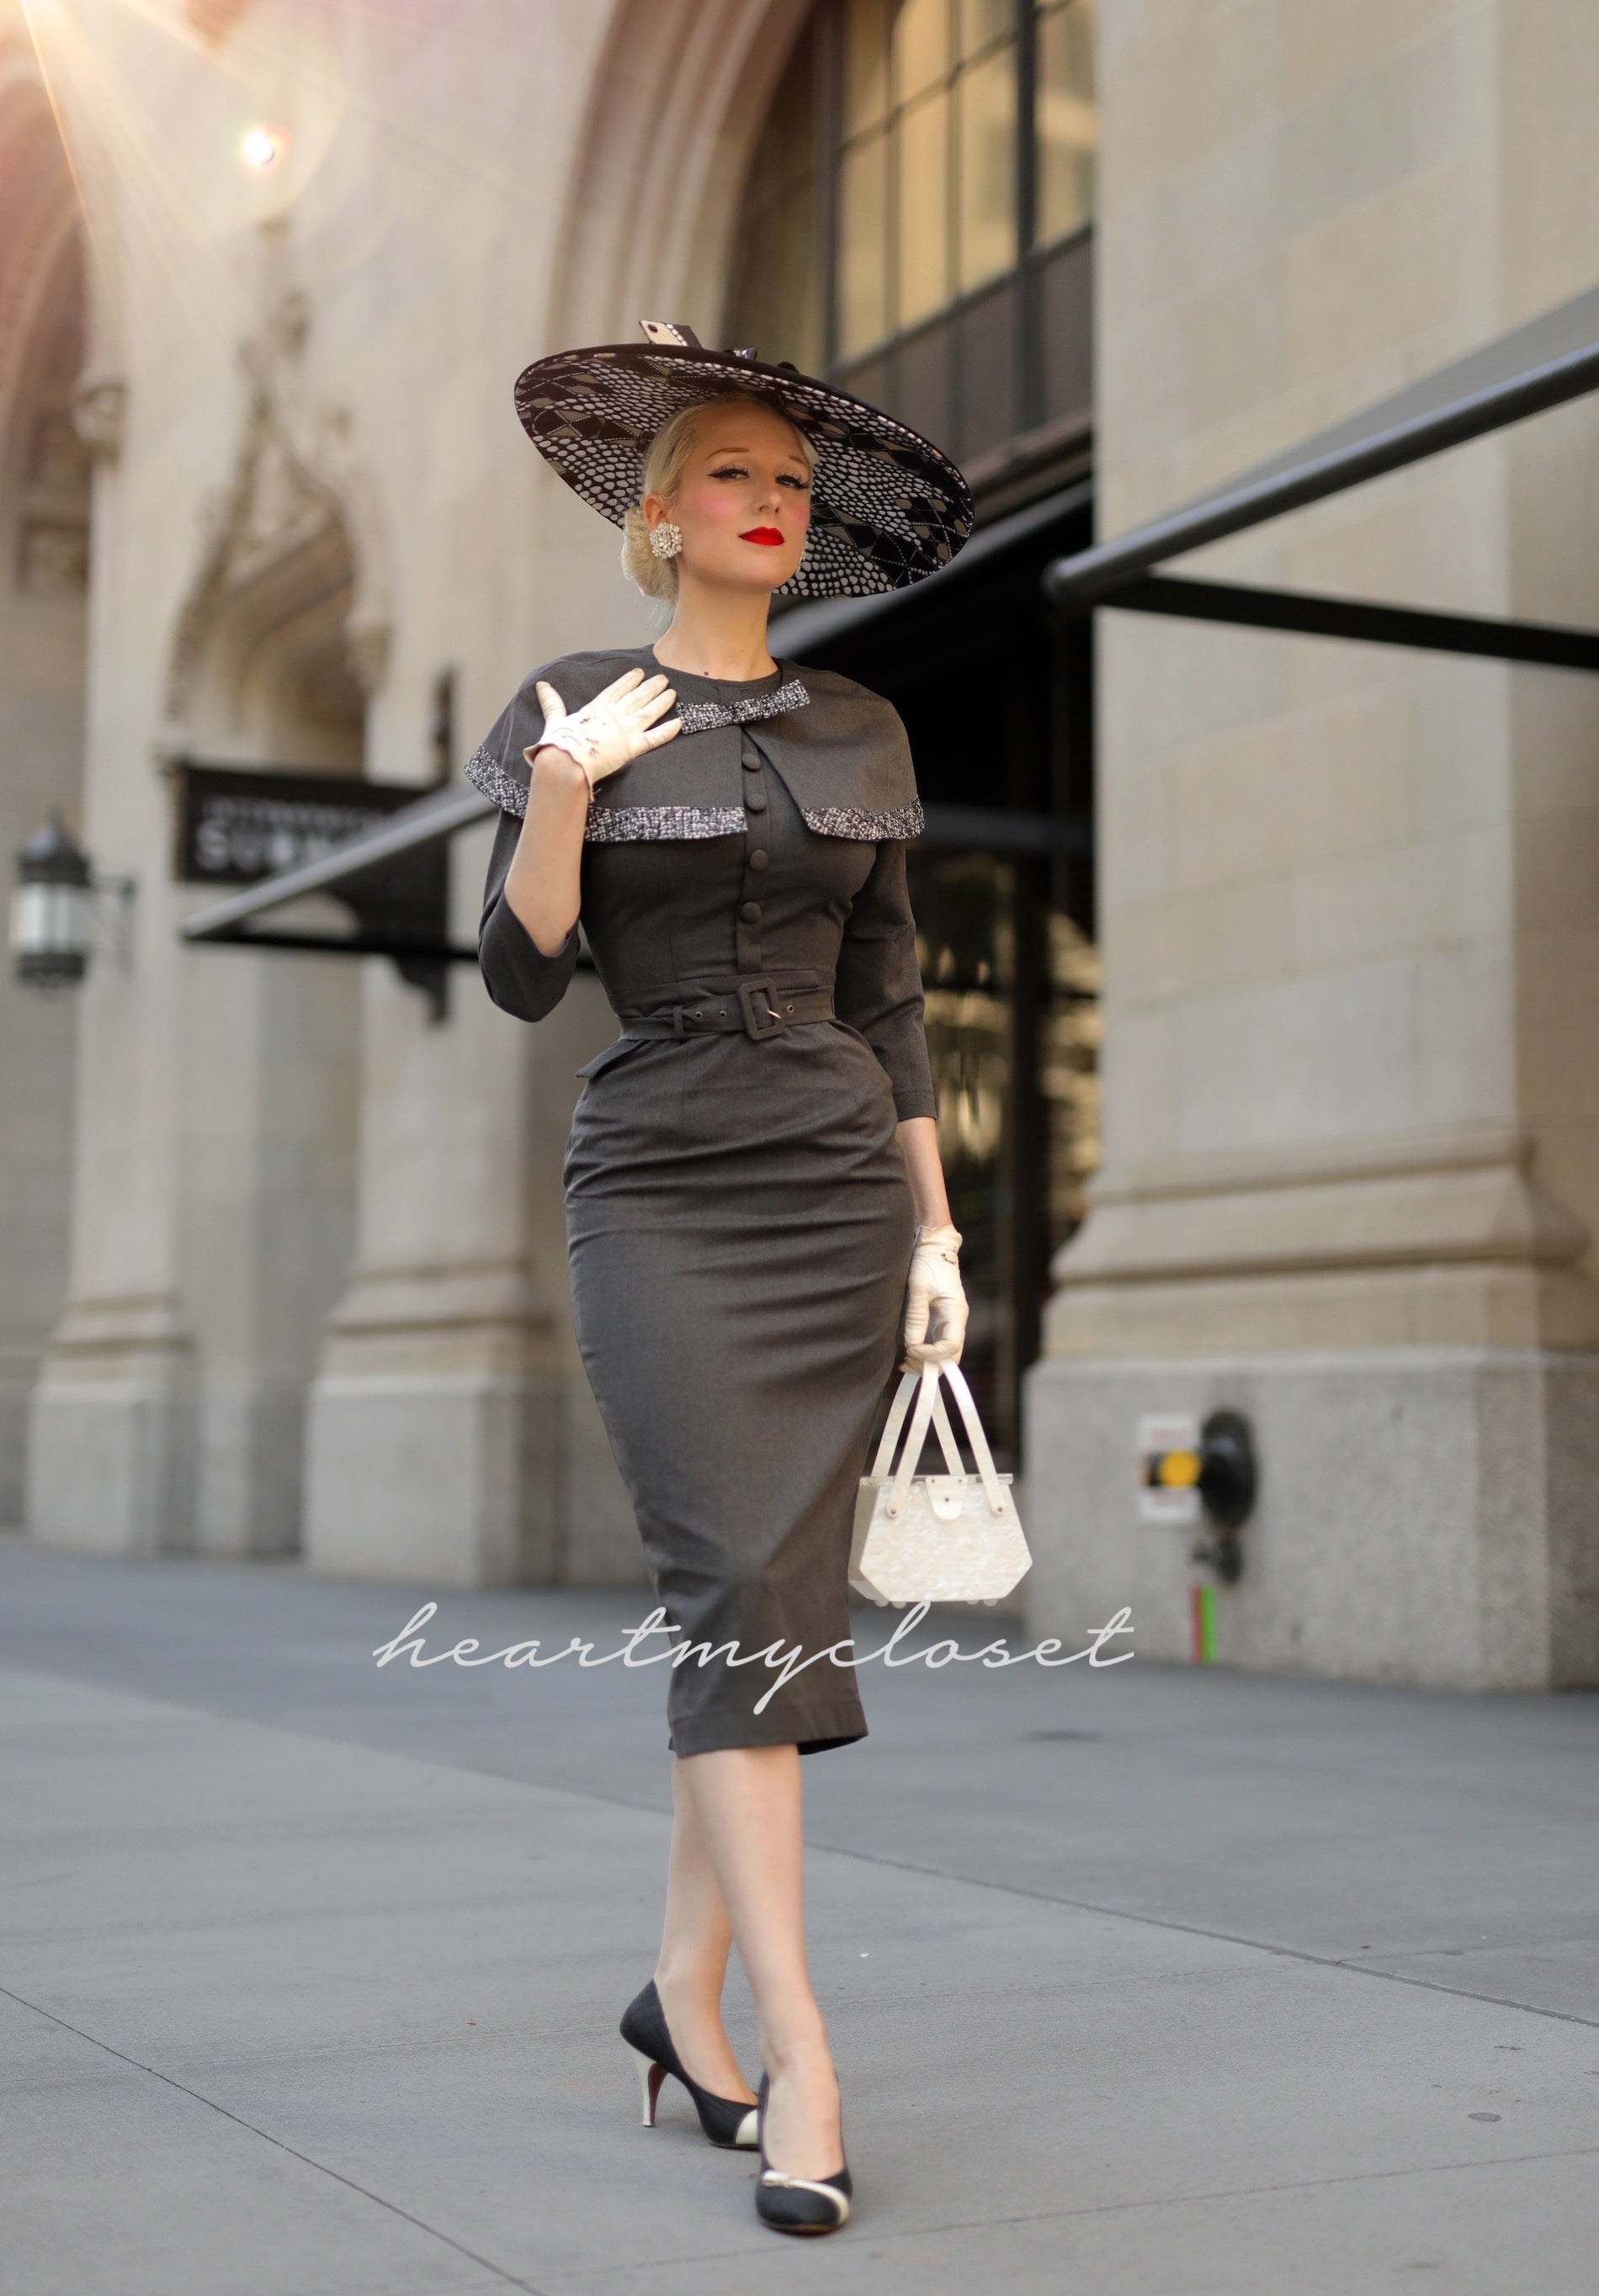 Lace Cape + dress - 50s 60s lace pencil dress with matching cape –  heartmycloset